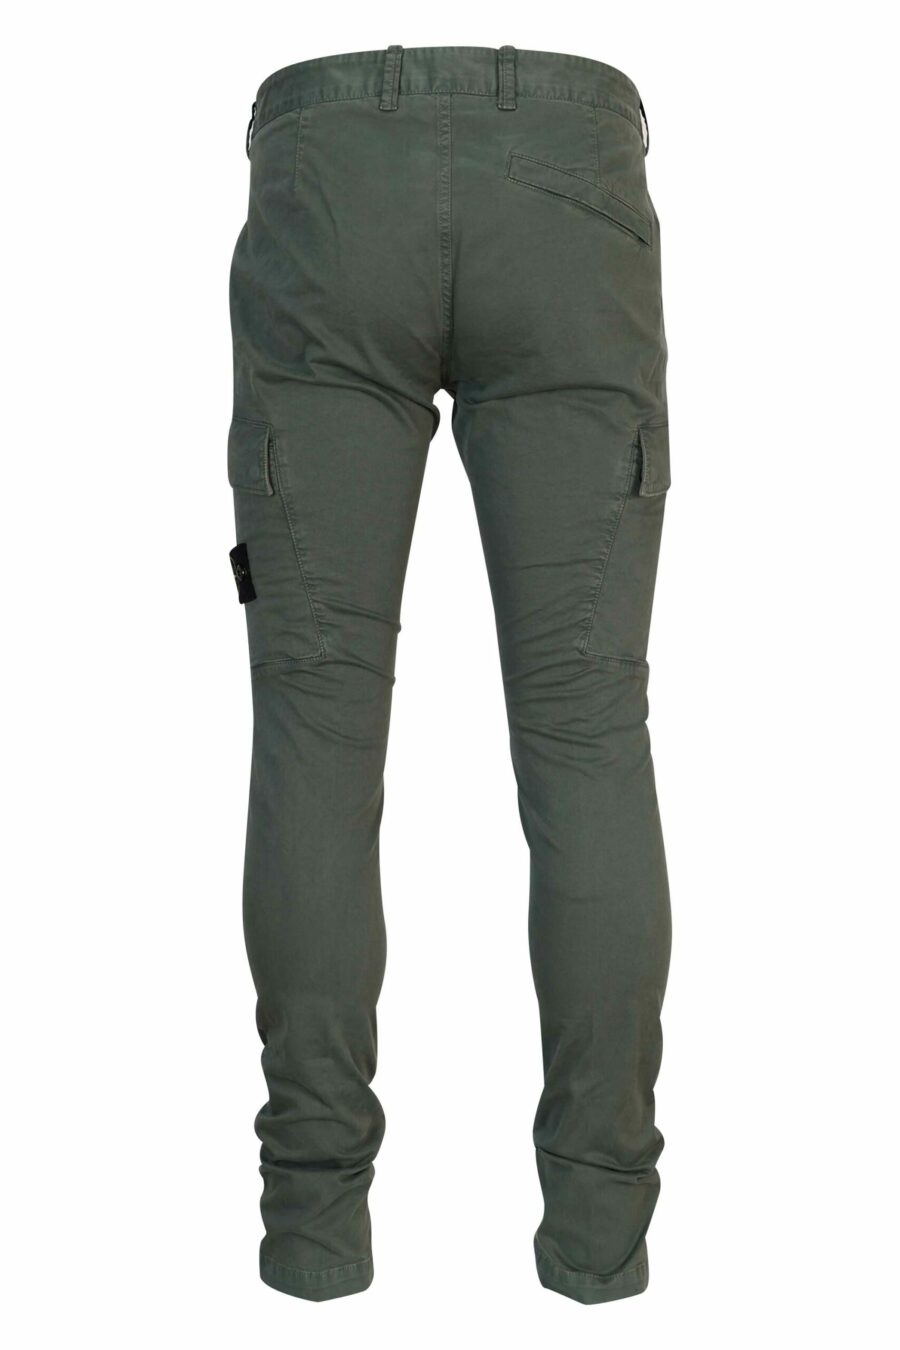 Pantalón verde militar "skinny" estilo cargo con logo parche brújula - 8052572930263 2 scaled